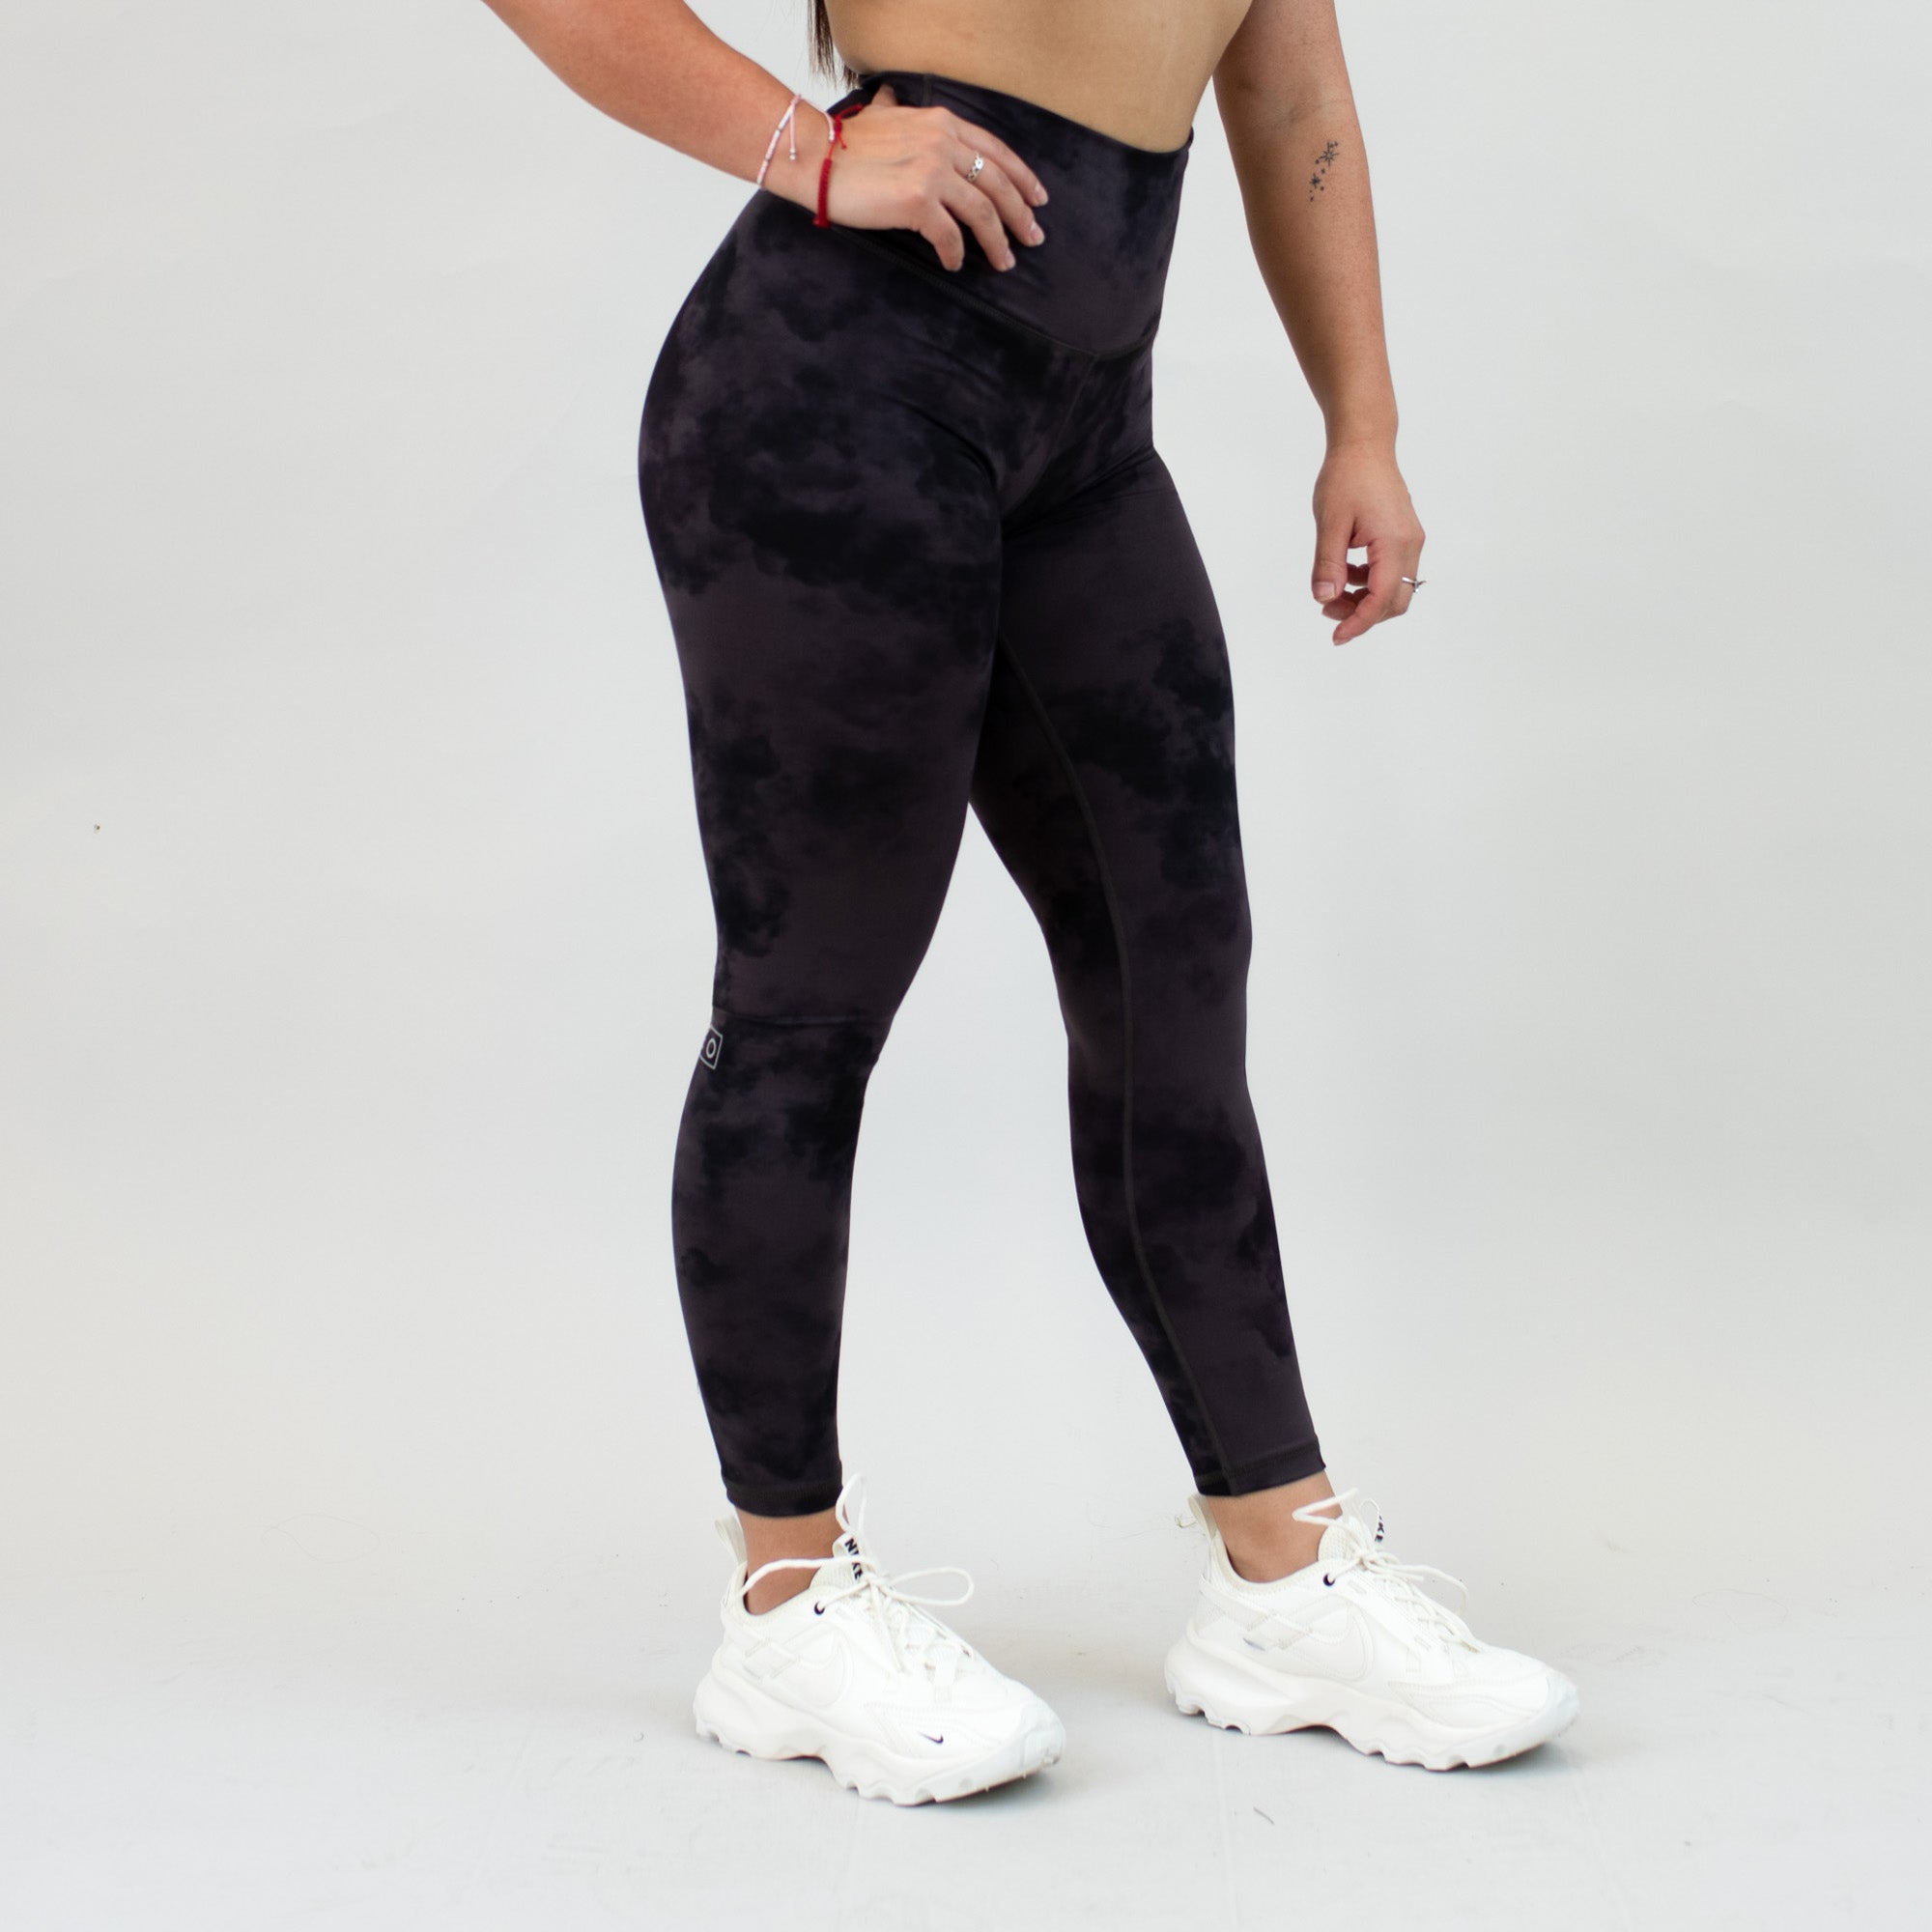 Mear Silor Sexy Women's Spandex Body Building Pants Bottoming Socks Panties  Tights Low Waist Yoga Pants (White, EL) in Saudi Arabia